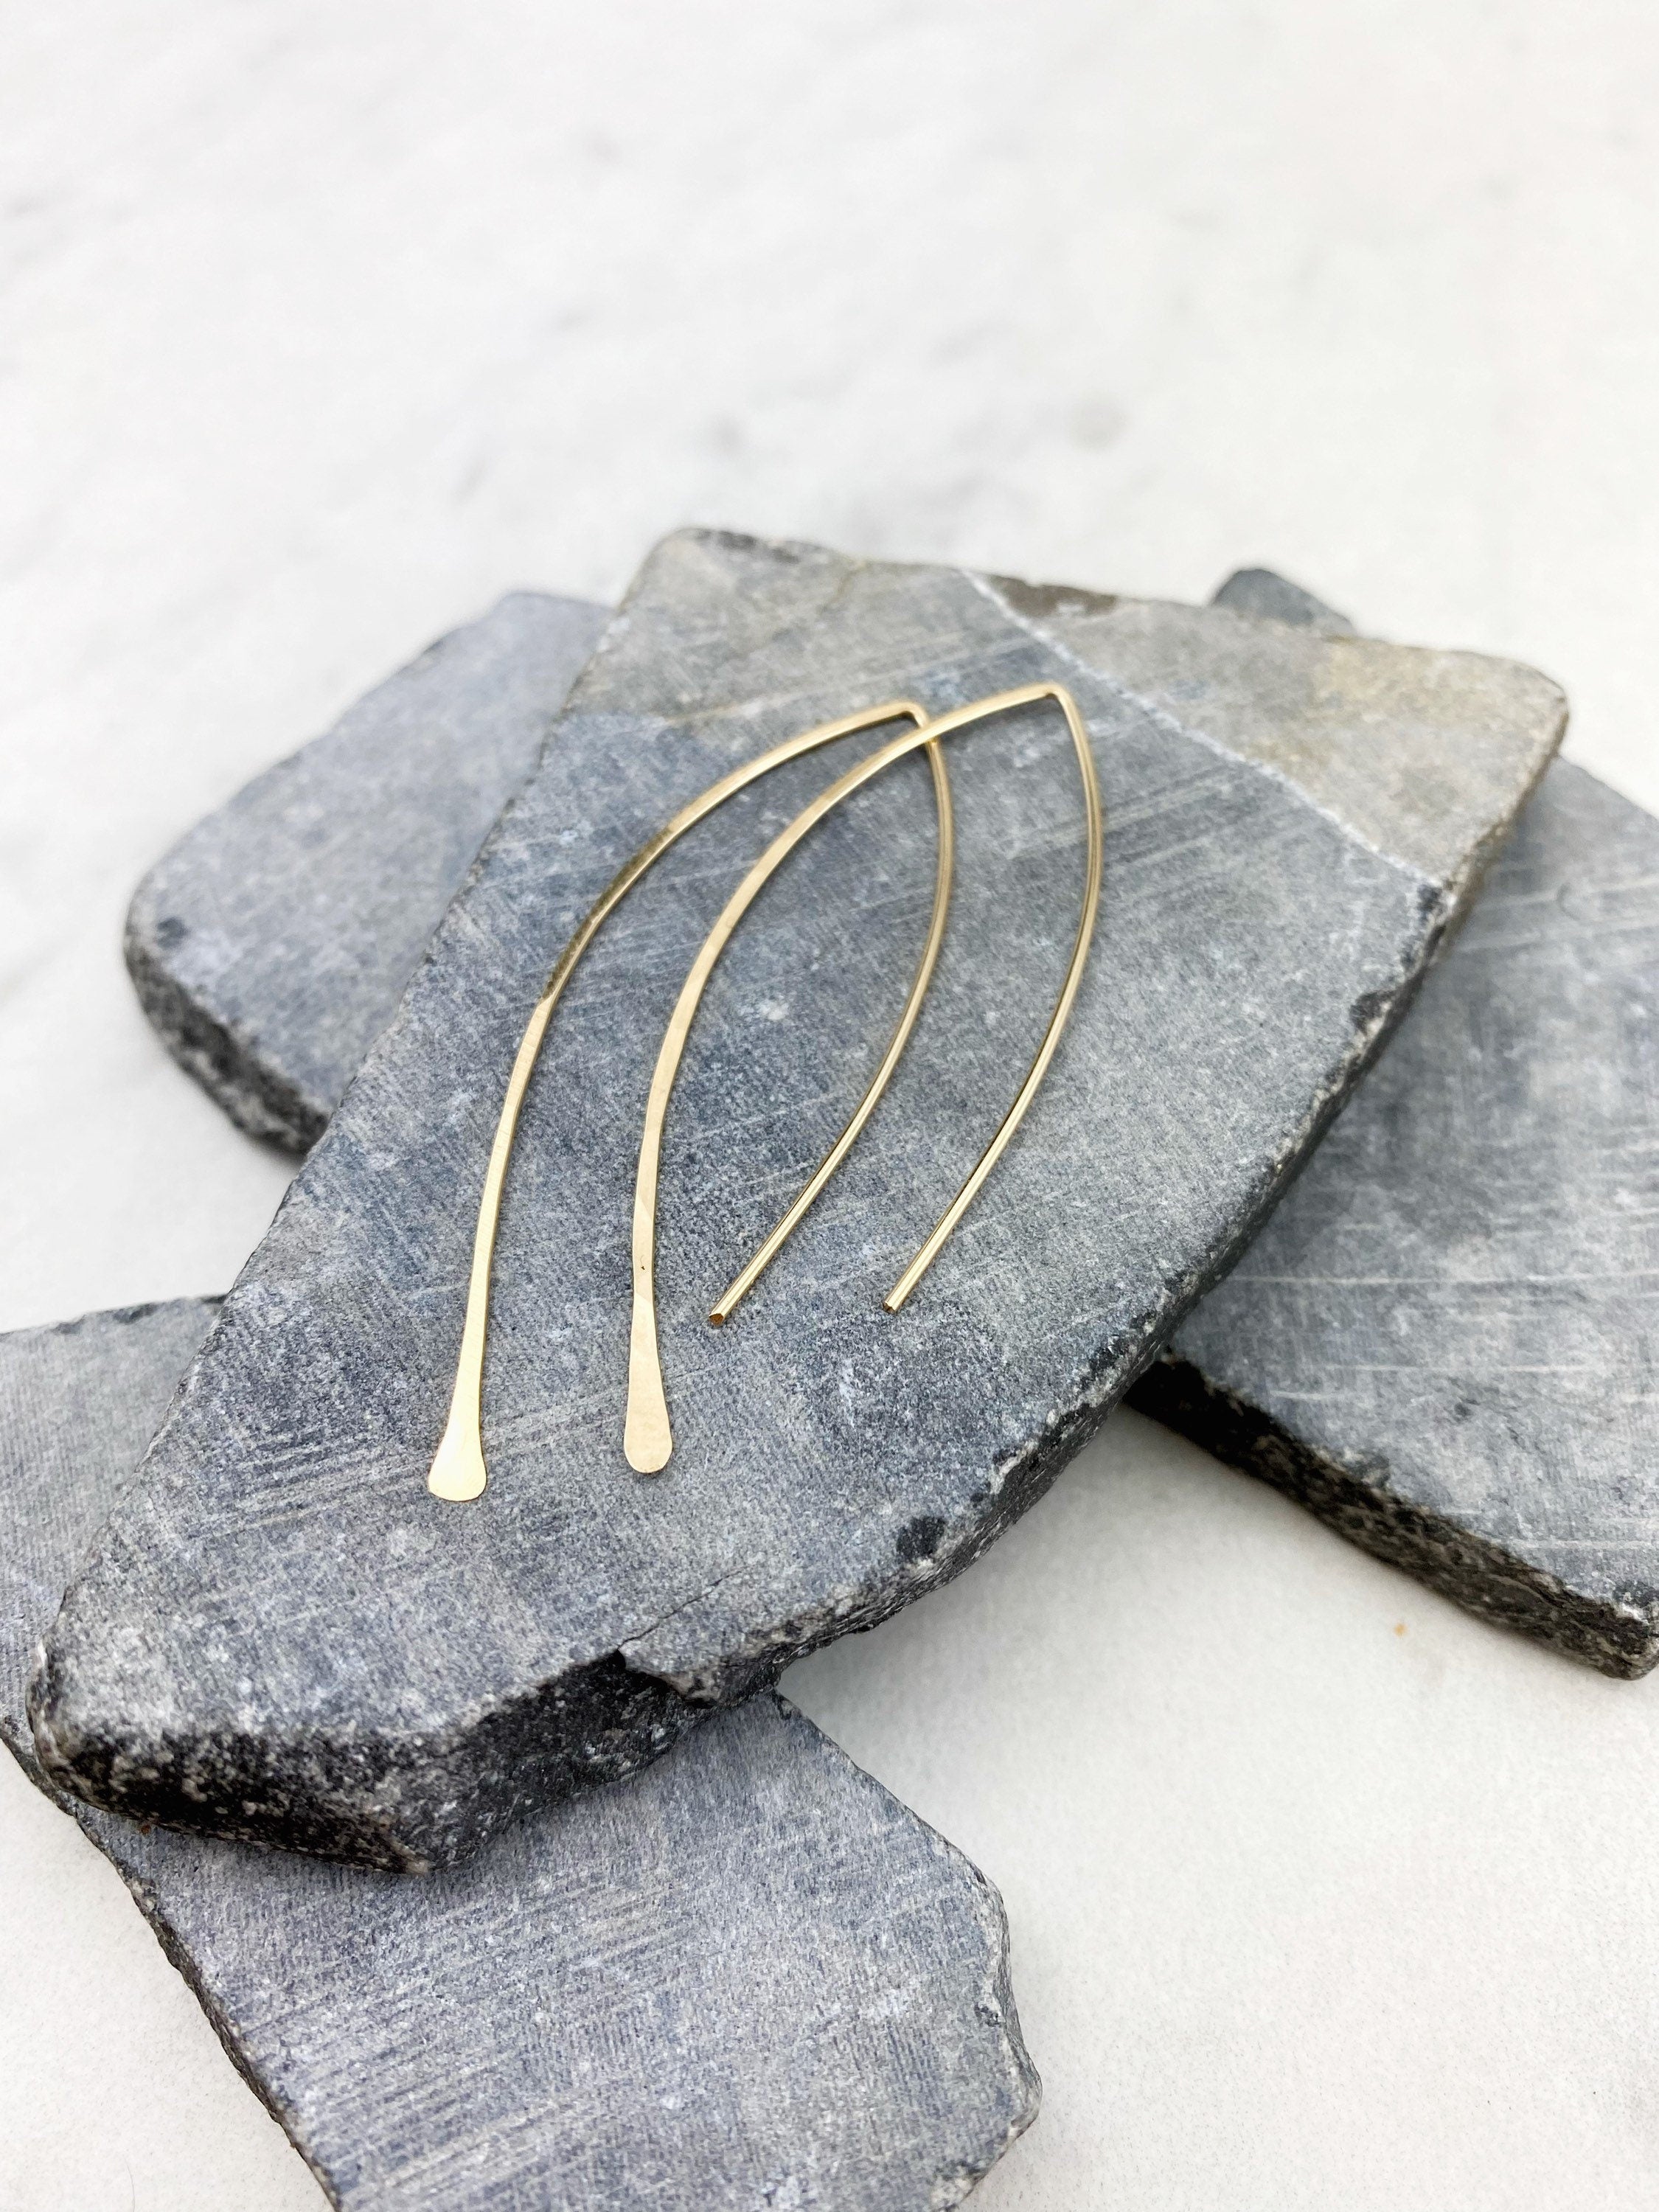 Hammered Gold Threader Earrings, minimalist earrings, drop earrings, open hoops, gold earrings